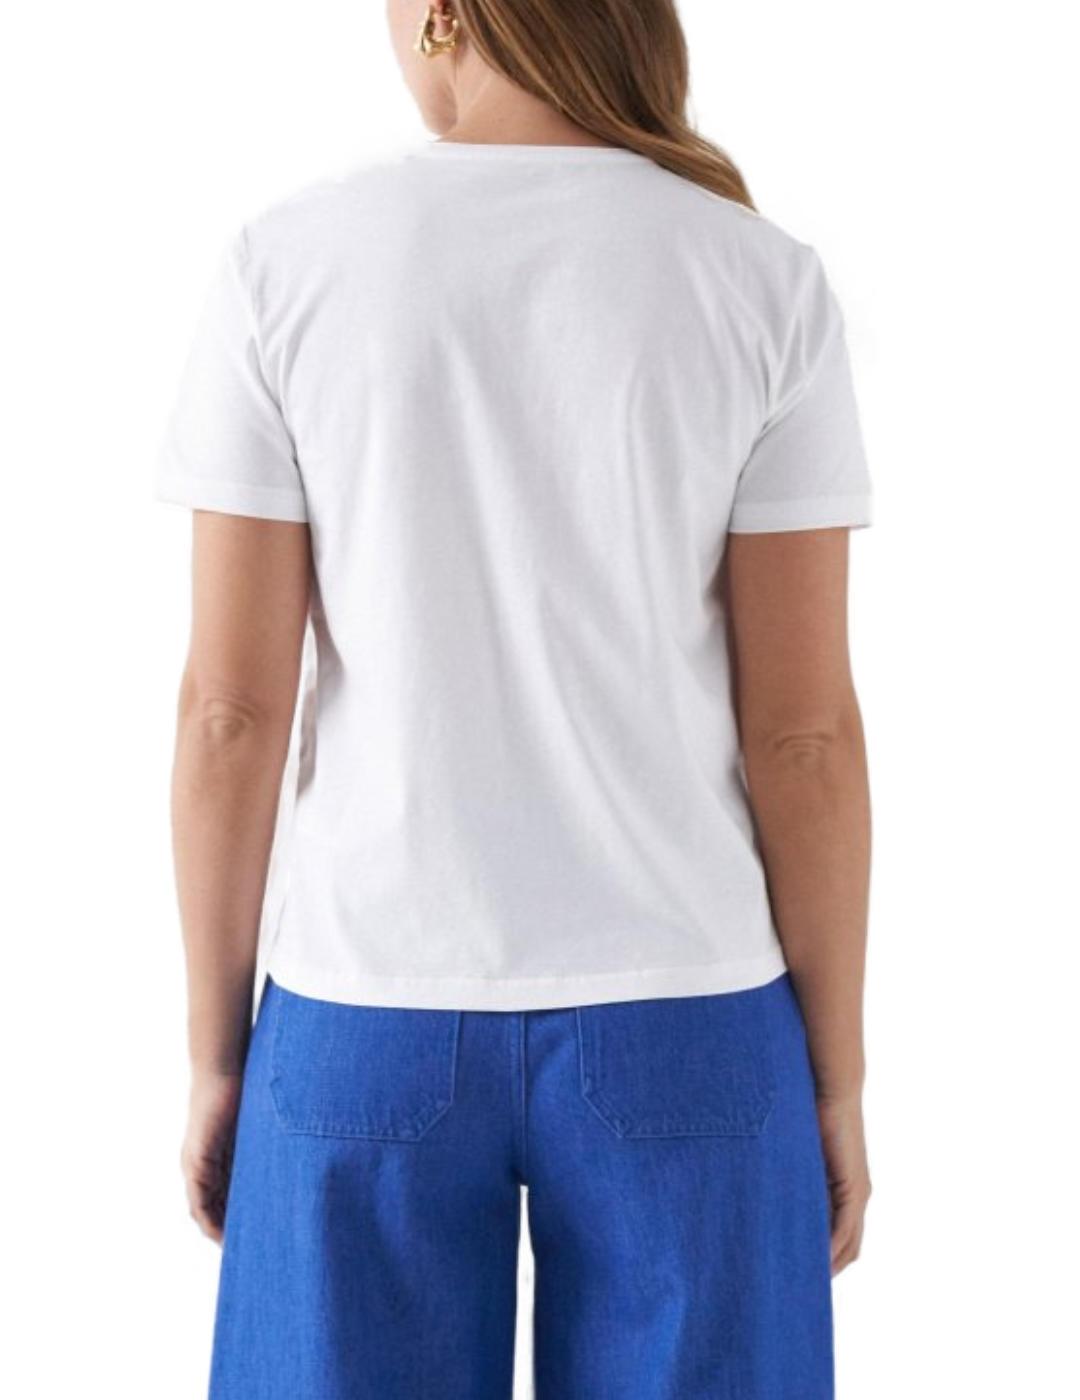 Camiseta Salsa blanca adorno bolsillo manga corta para mujer